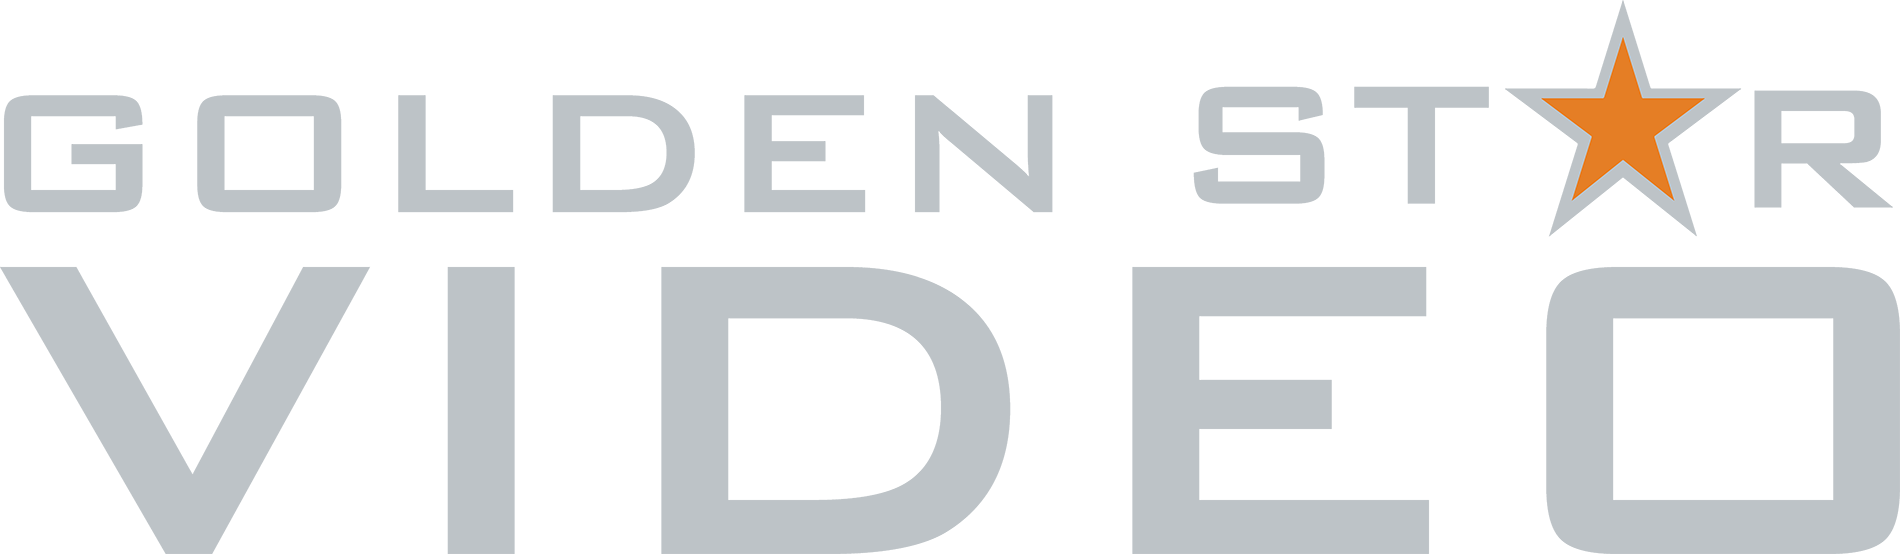 Golden Star Video logo